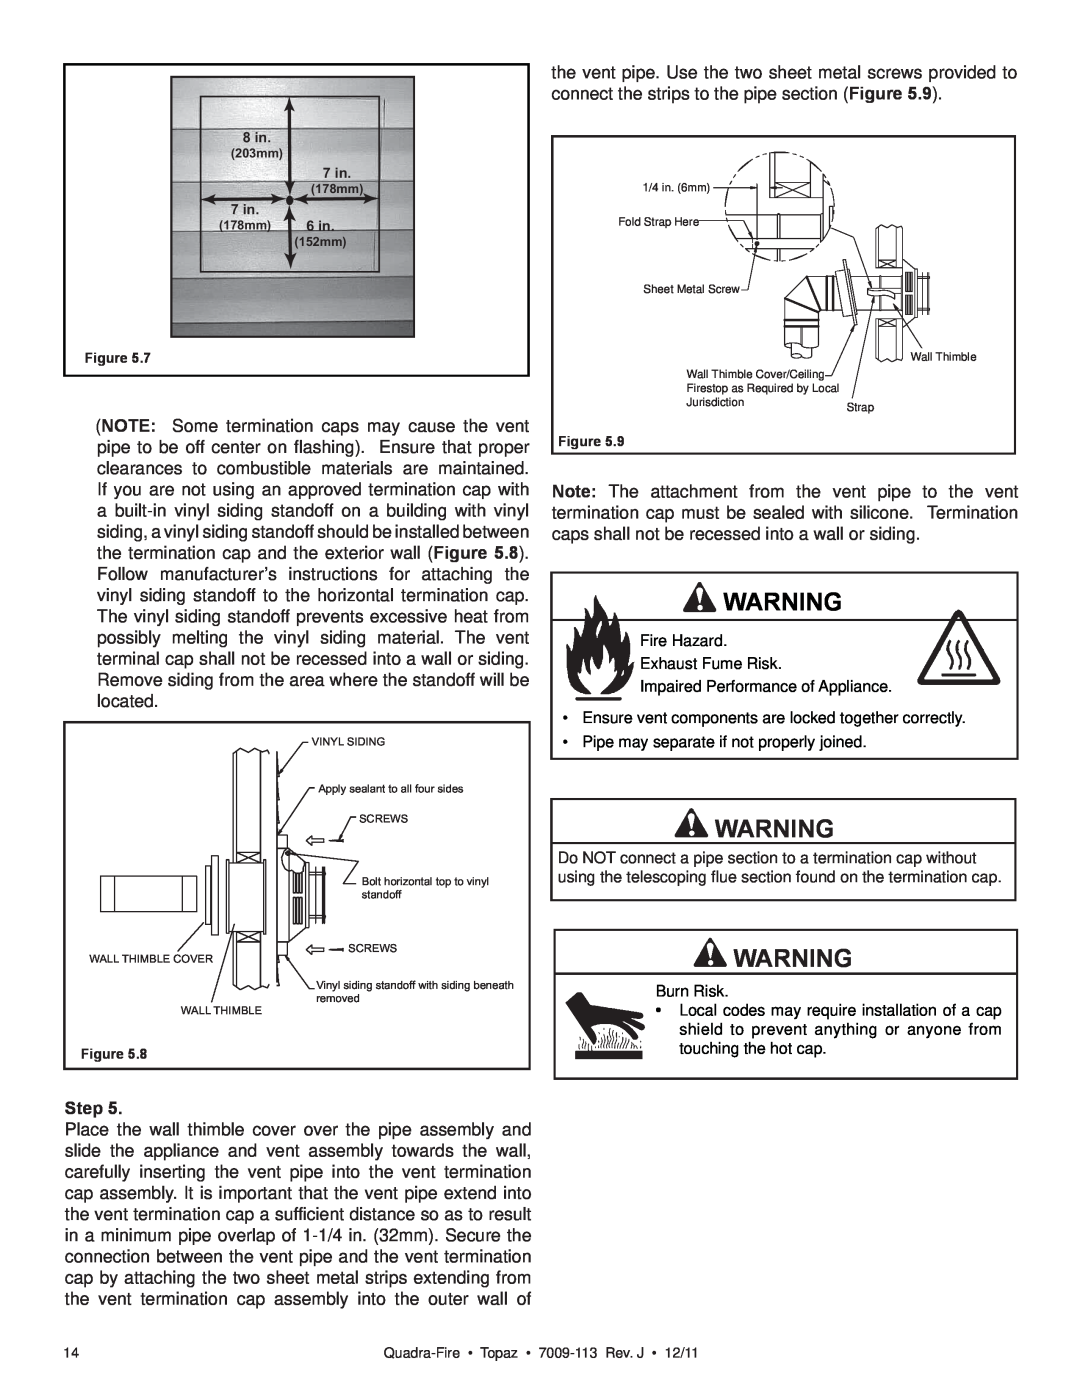 OmniTek 839-1340 Step, Fire Hazard Exhaust Fume Risk, Impaired Performance of Appliance, Burn Risk, 8 in, 7 in, 6 in 